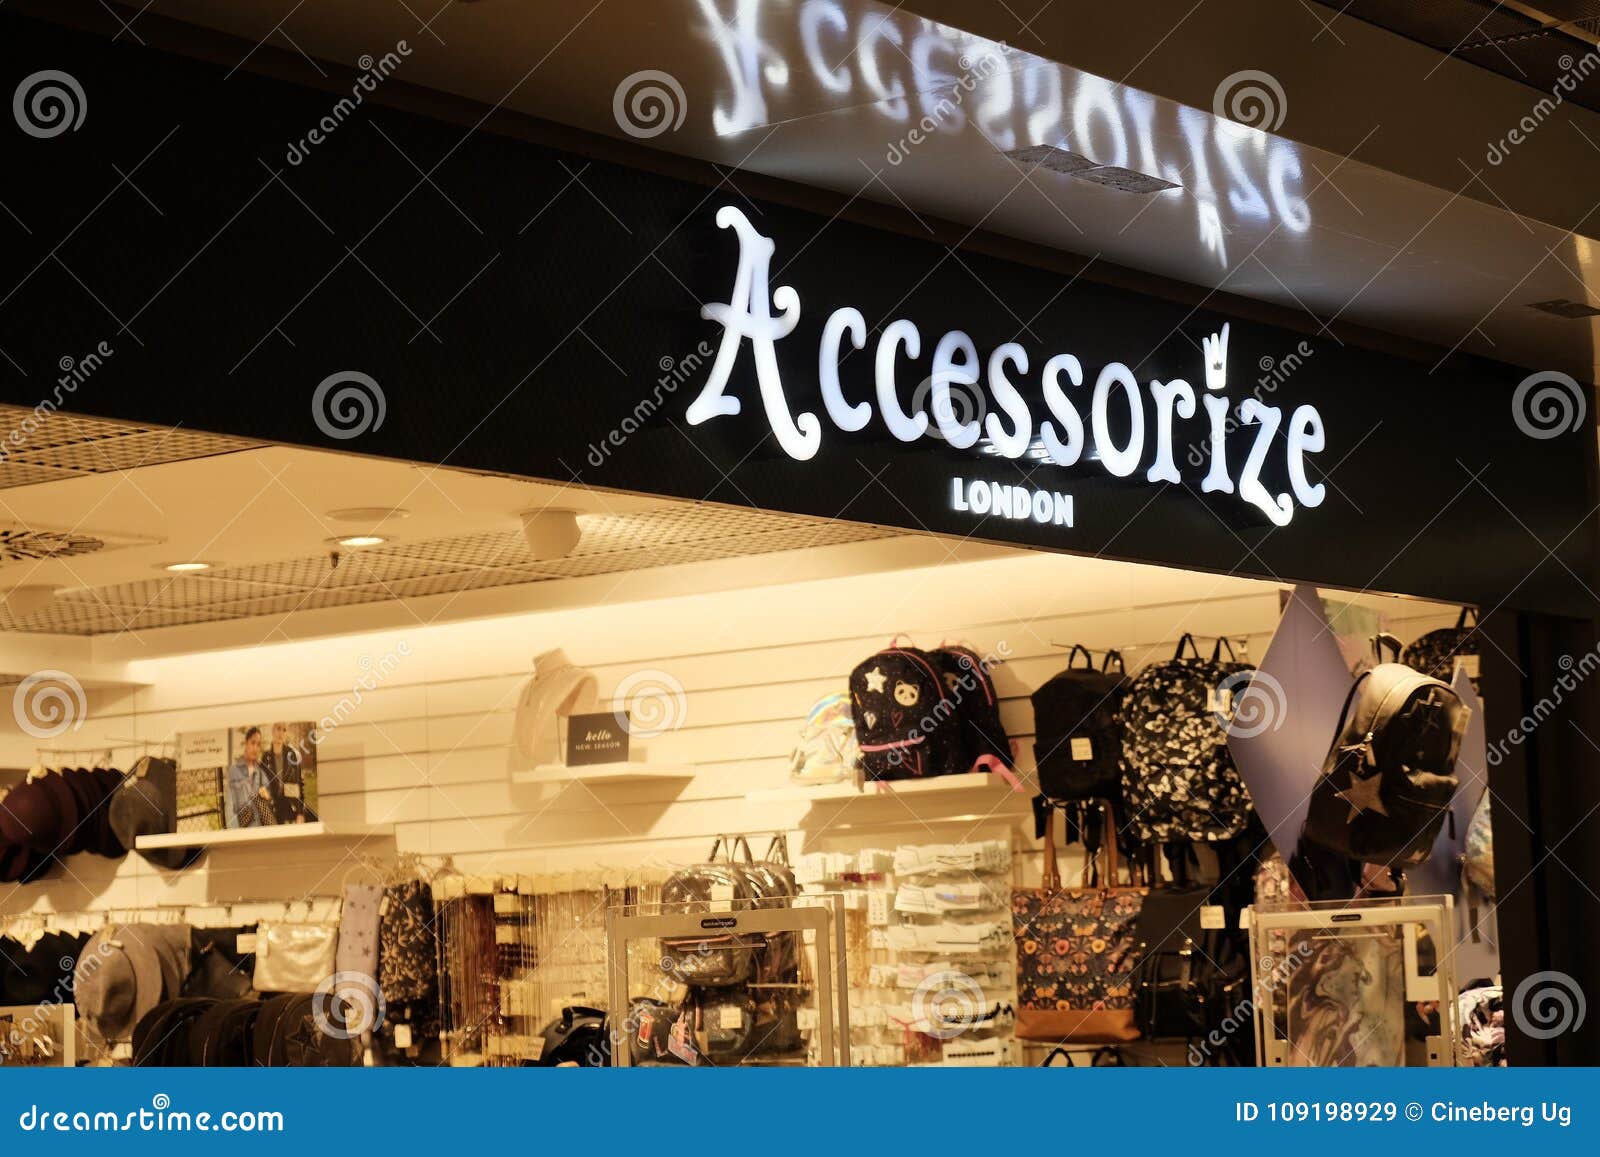 Buy Accessorize London Croc Tote Bag Online